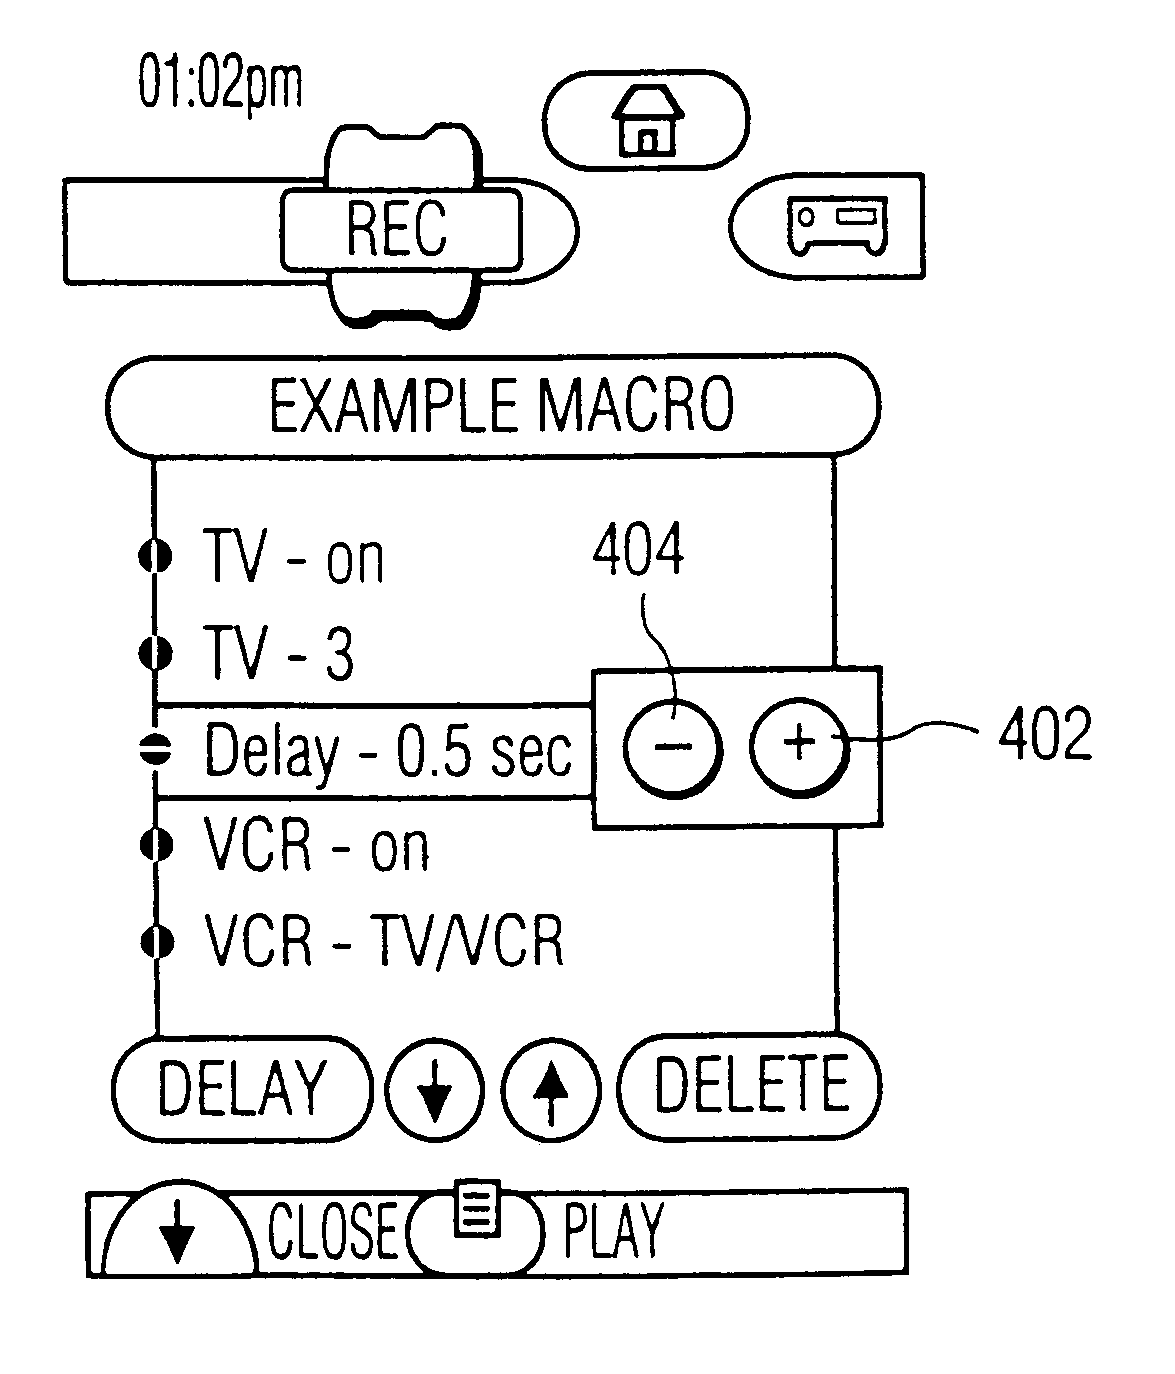 GUI of remote control facilitates user-friendly editing of macros